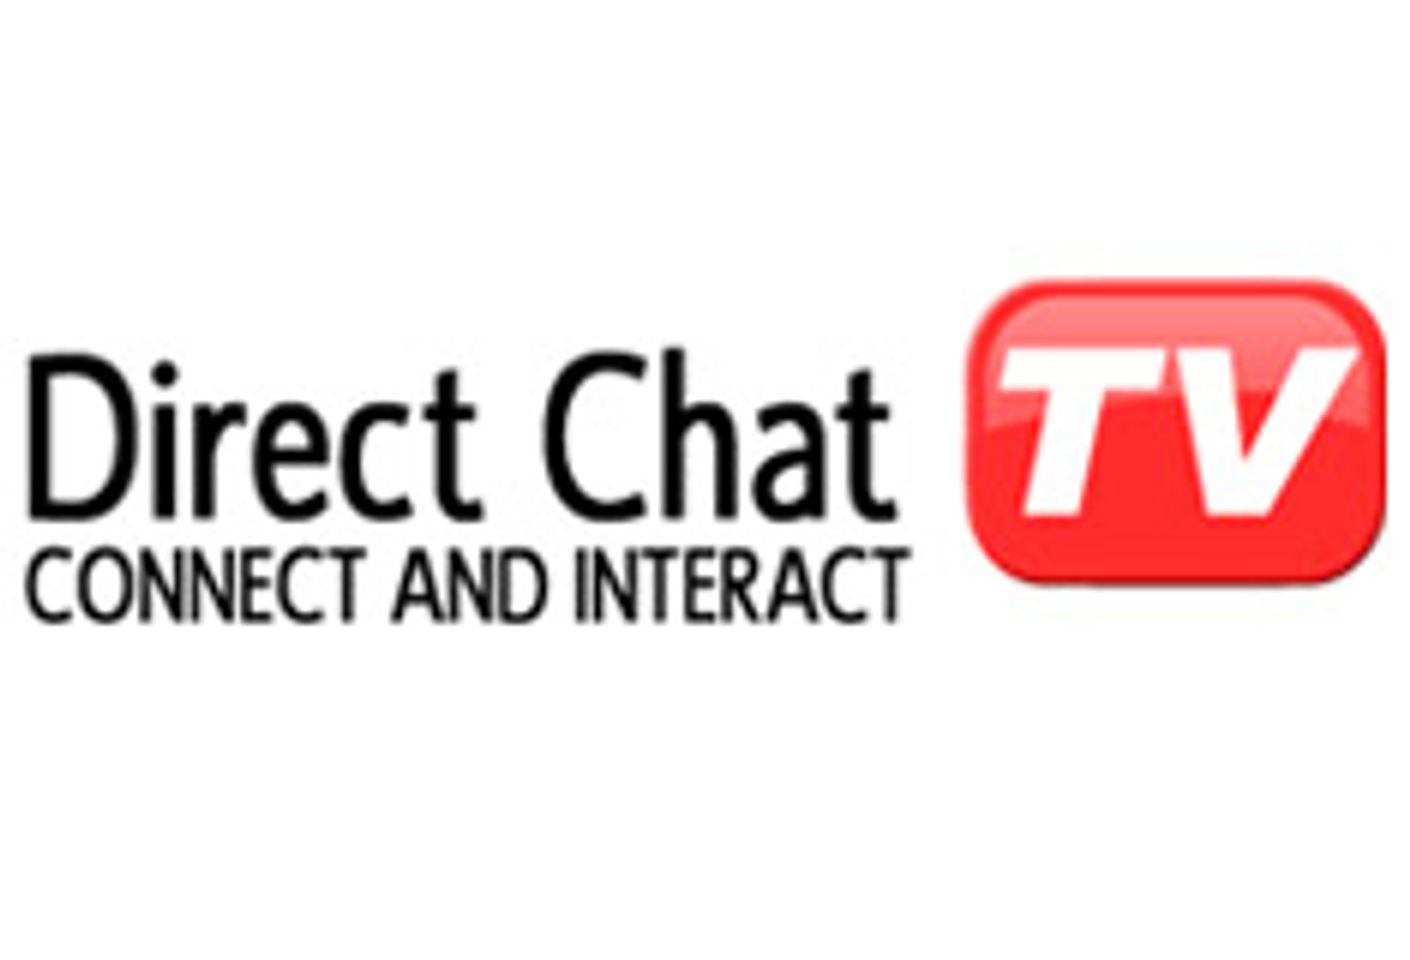 DirectChat.tv Reveals Details, Sponsors for Anniversary Bash